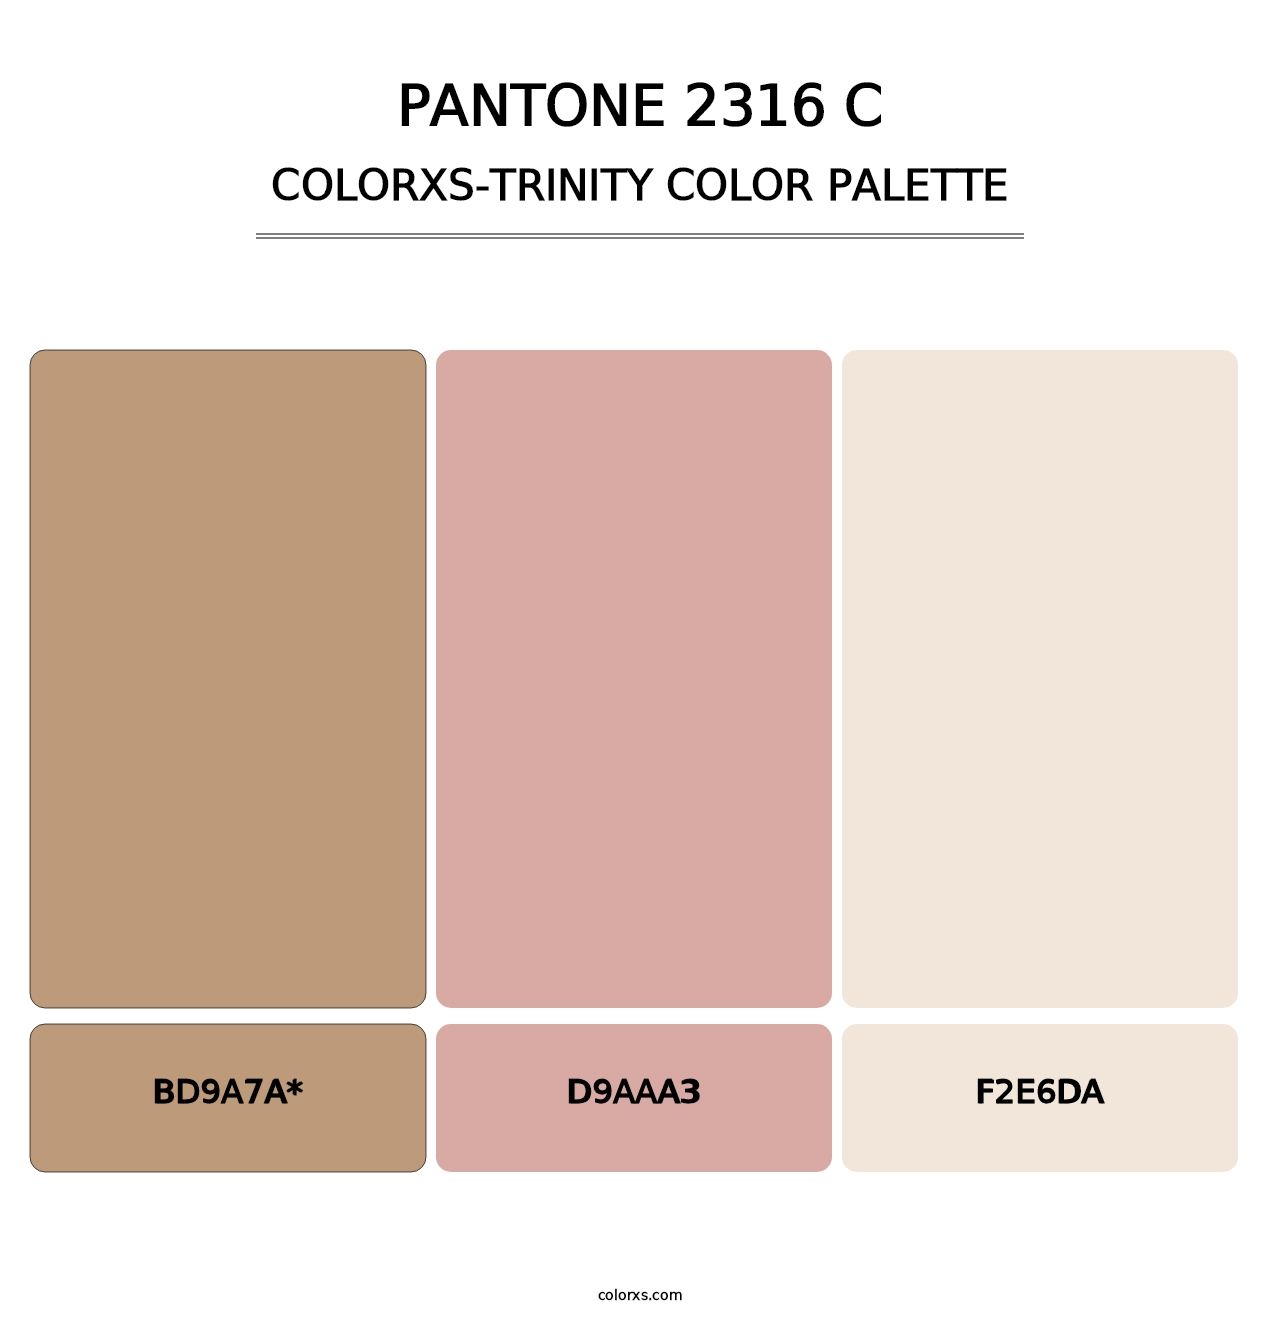 PANTONE 2316 C - Colorxs Trinity Palette